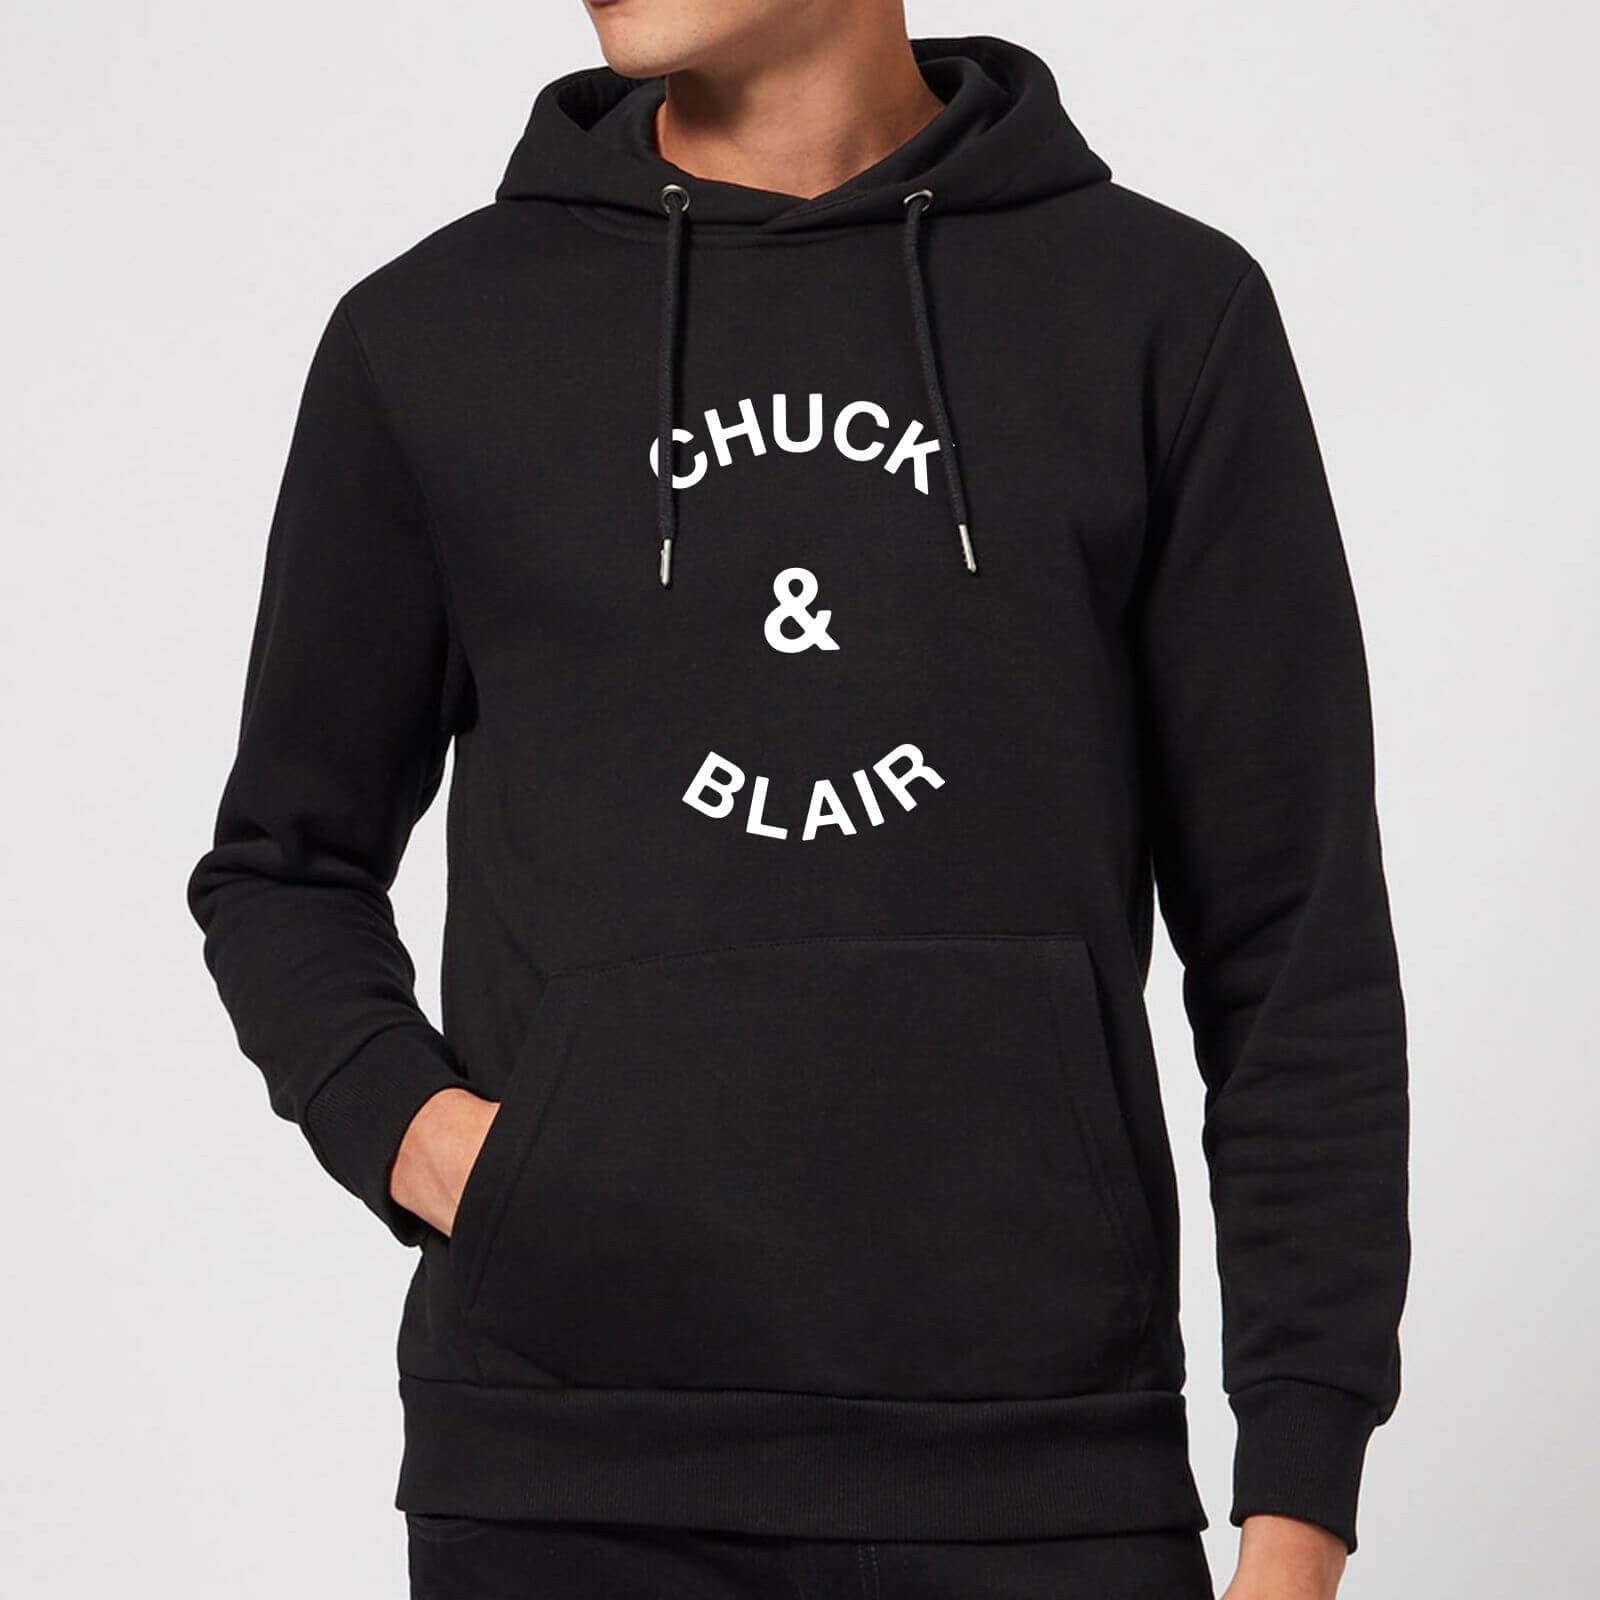 Chuck & Blair Hoodie - Black - L - Black